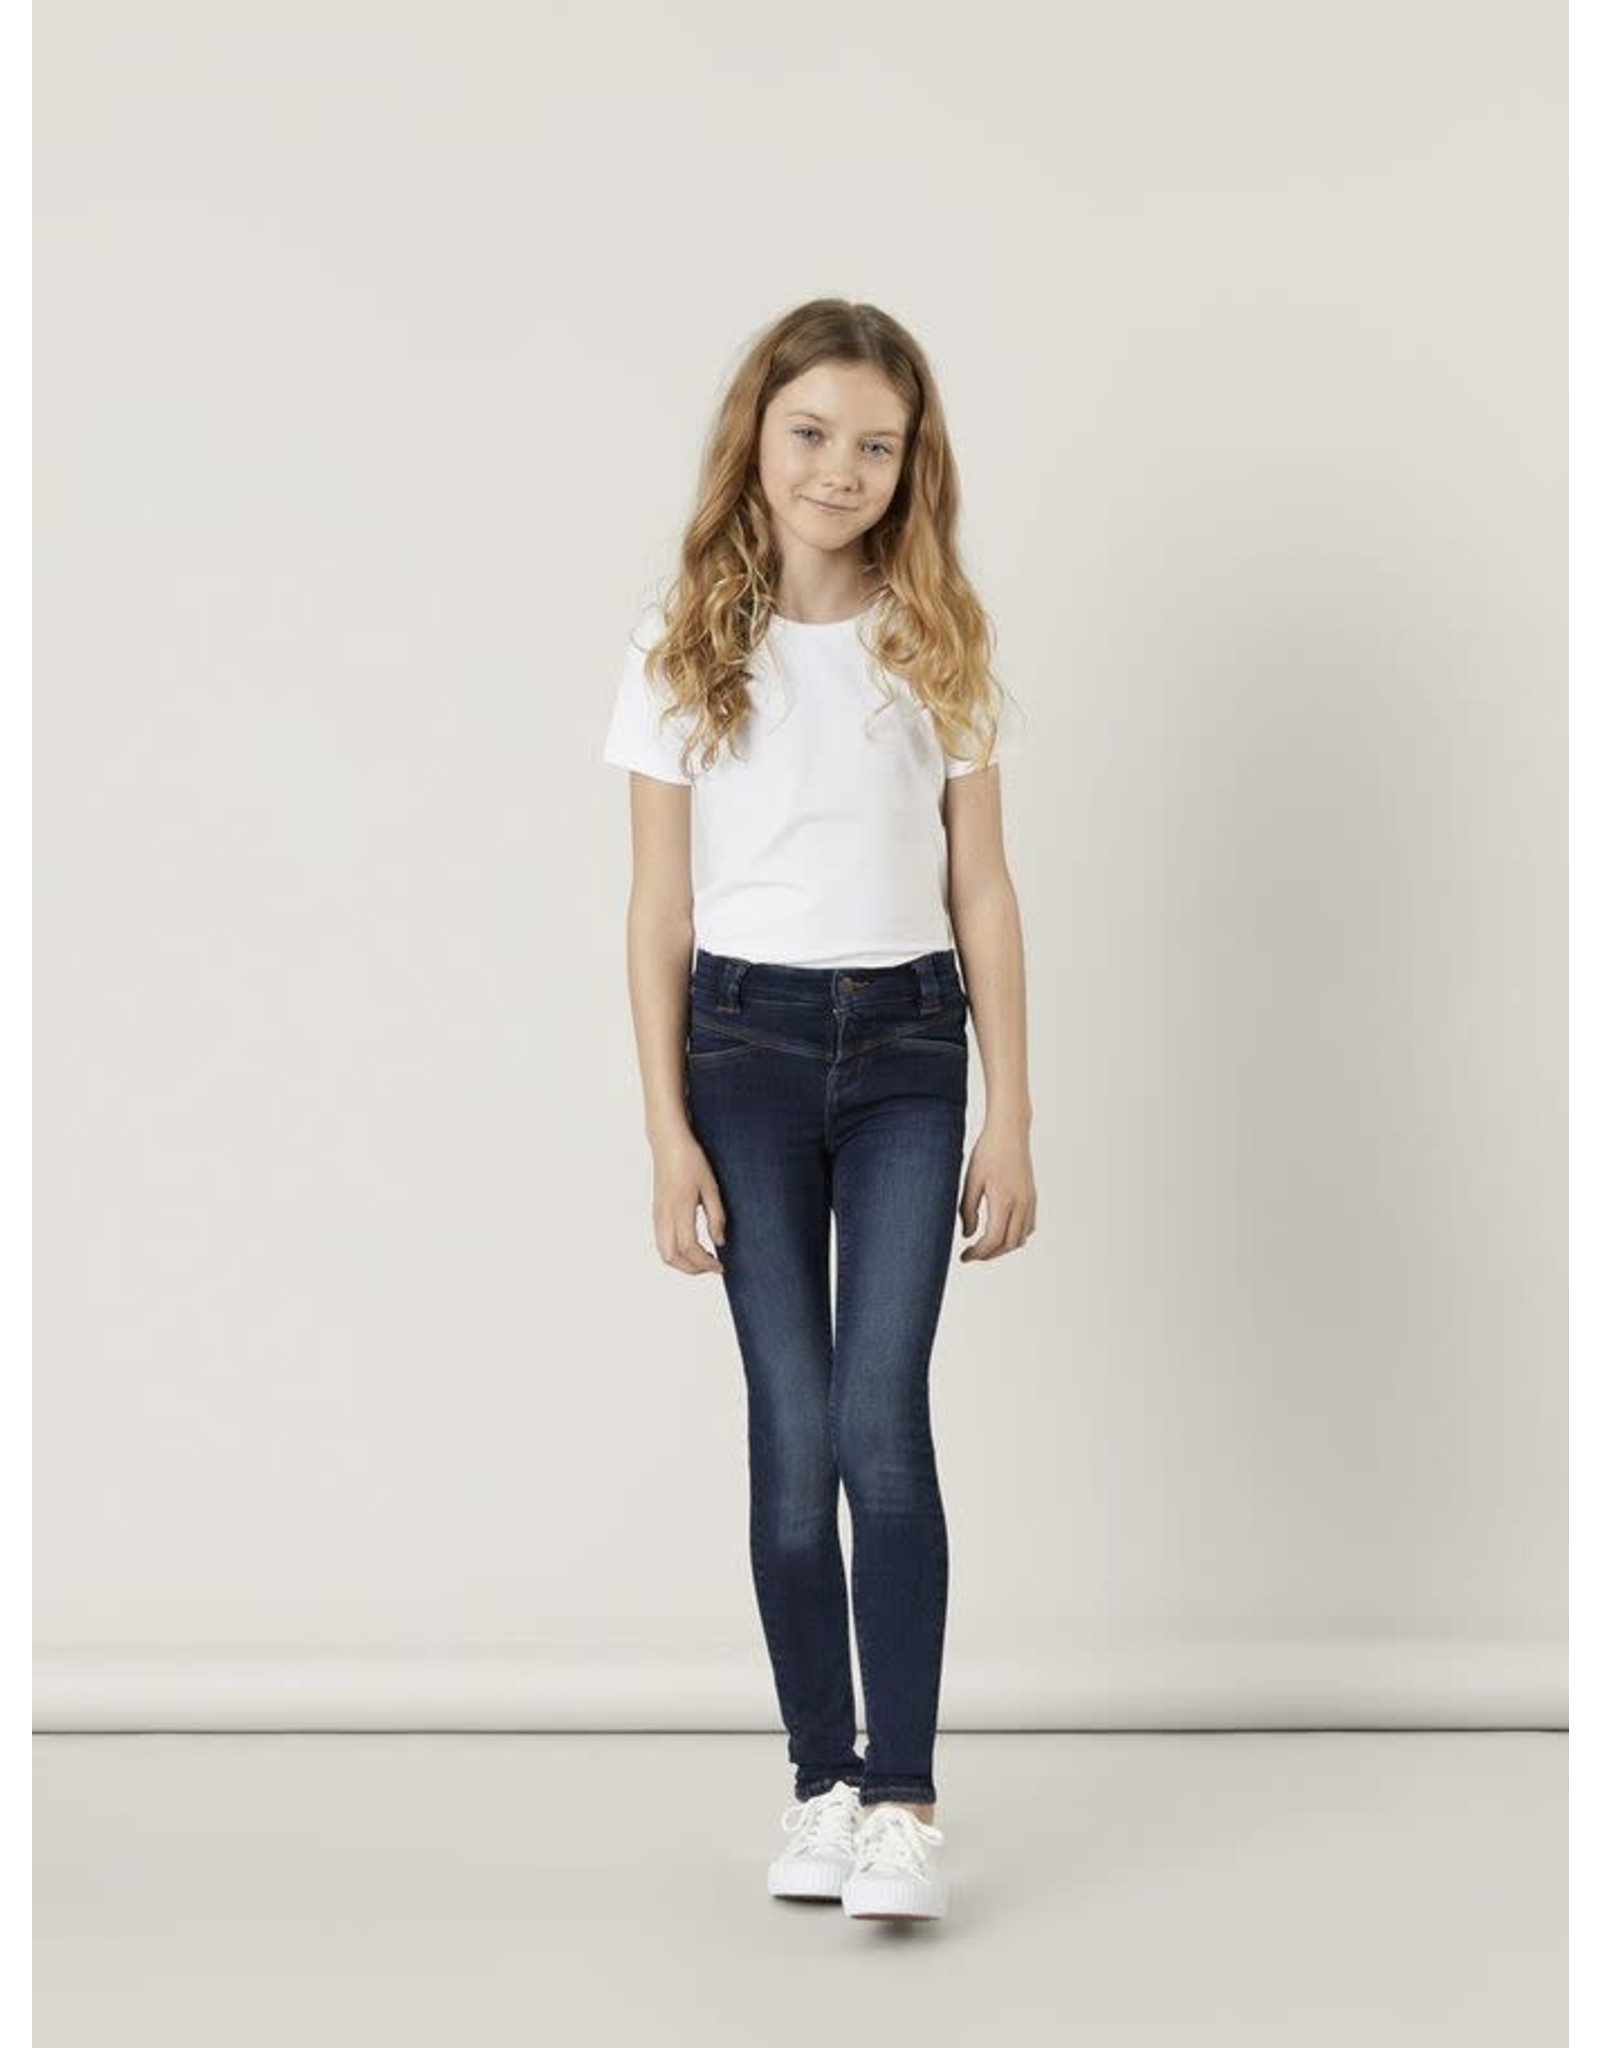 afwijzing Uitdrukkelijk Schotel Donkerblauwe skinny jeans voor meisjes van Name It | hejsan.be - Hejsan  Hoppsan